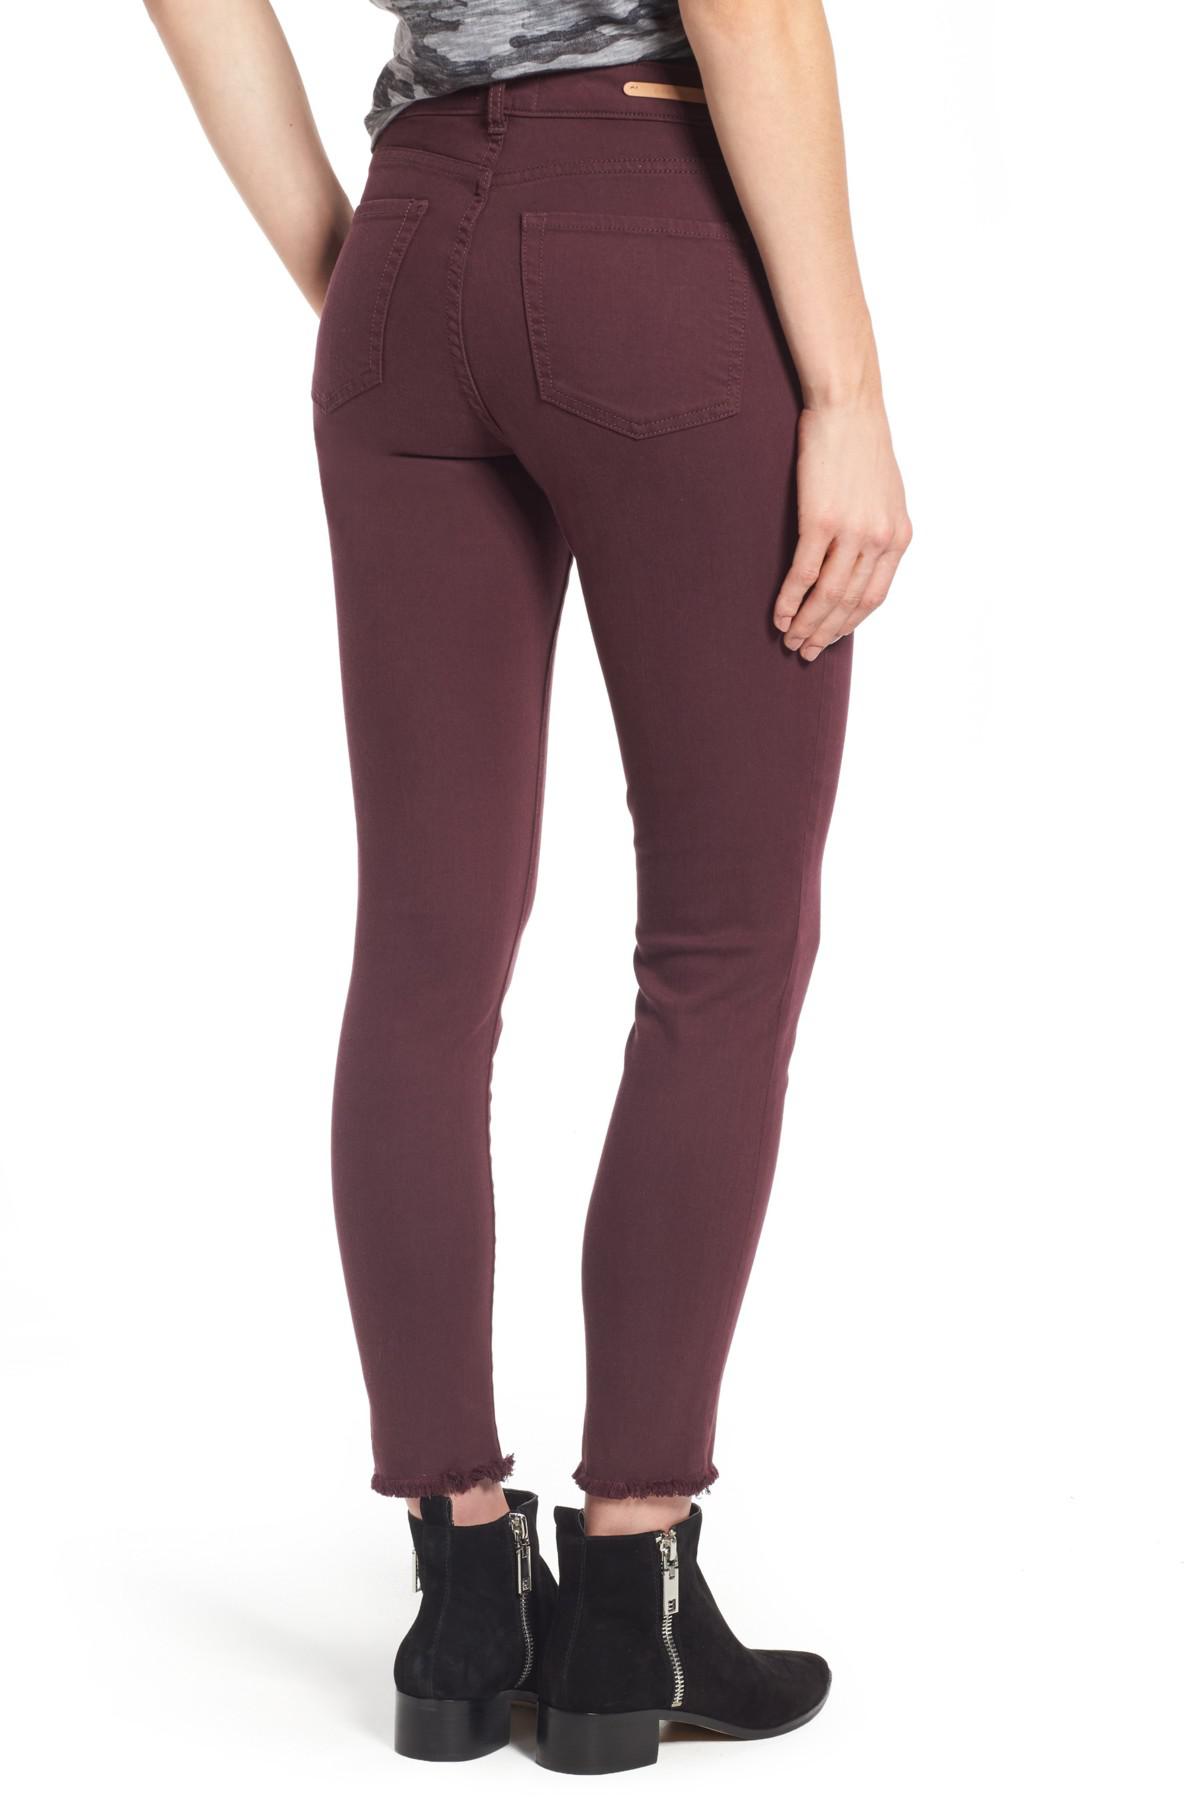 Lyst - Caslon Caslon Frayed Hem Skinny Ankle Jeans in Purple